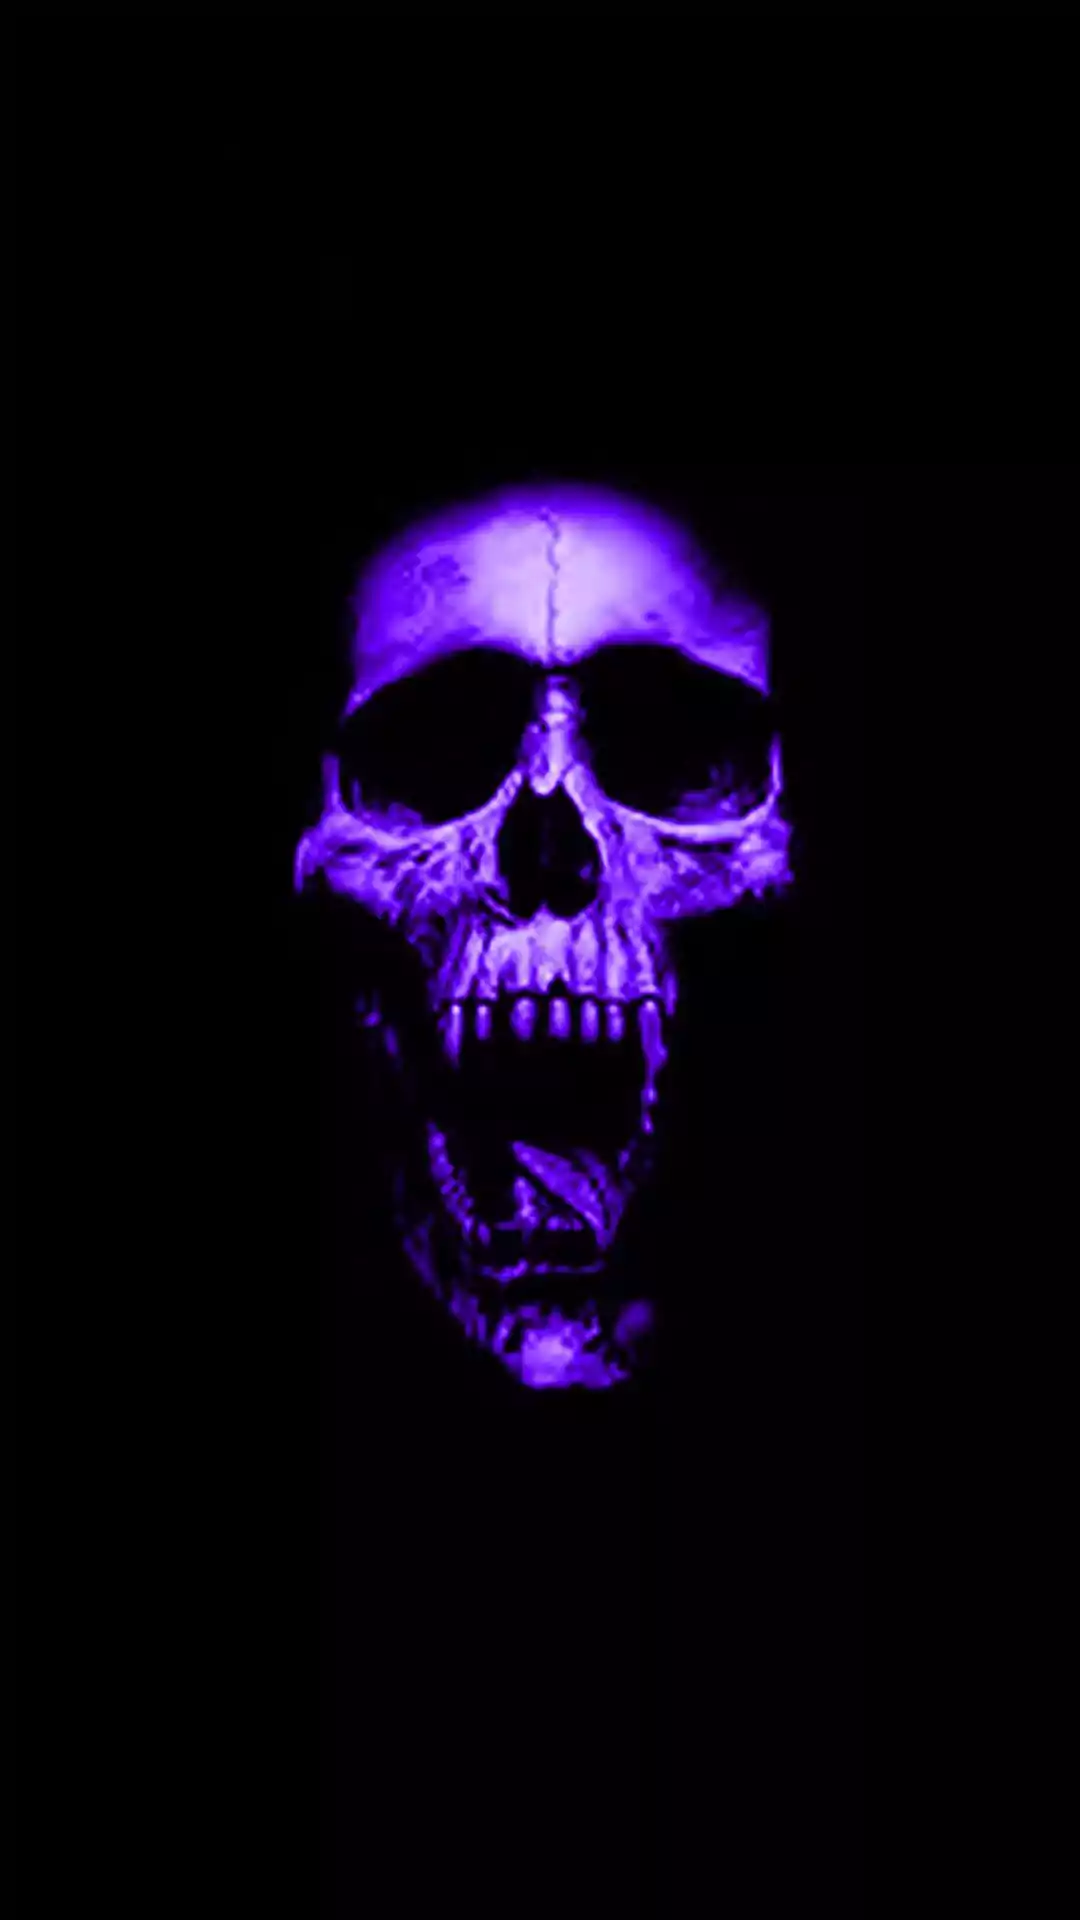 Dark Purple Images - Free Download on Freepik